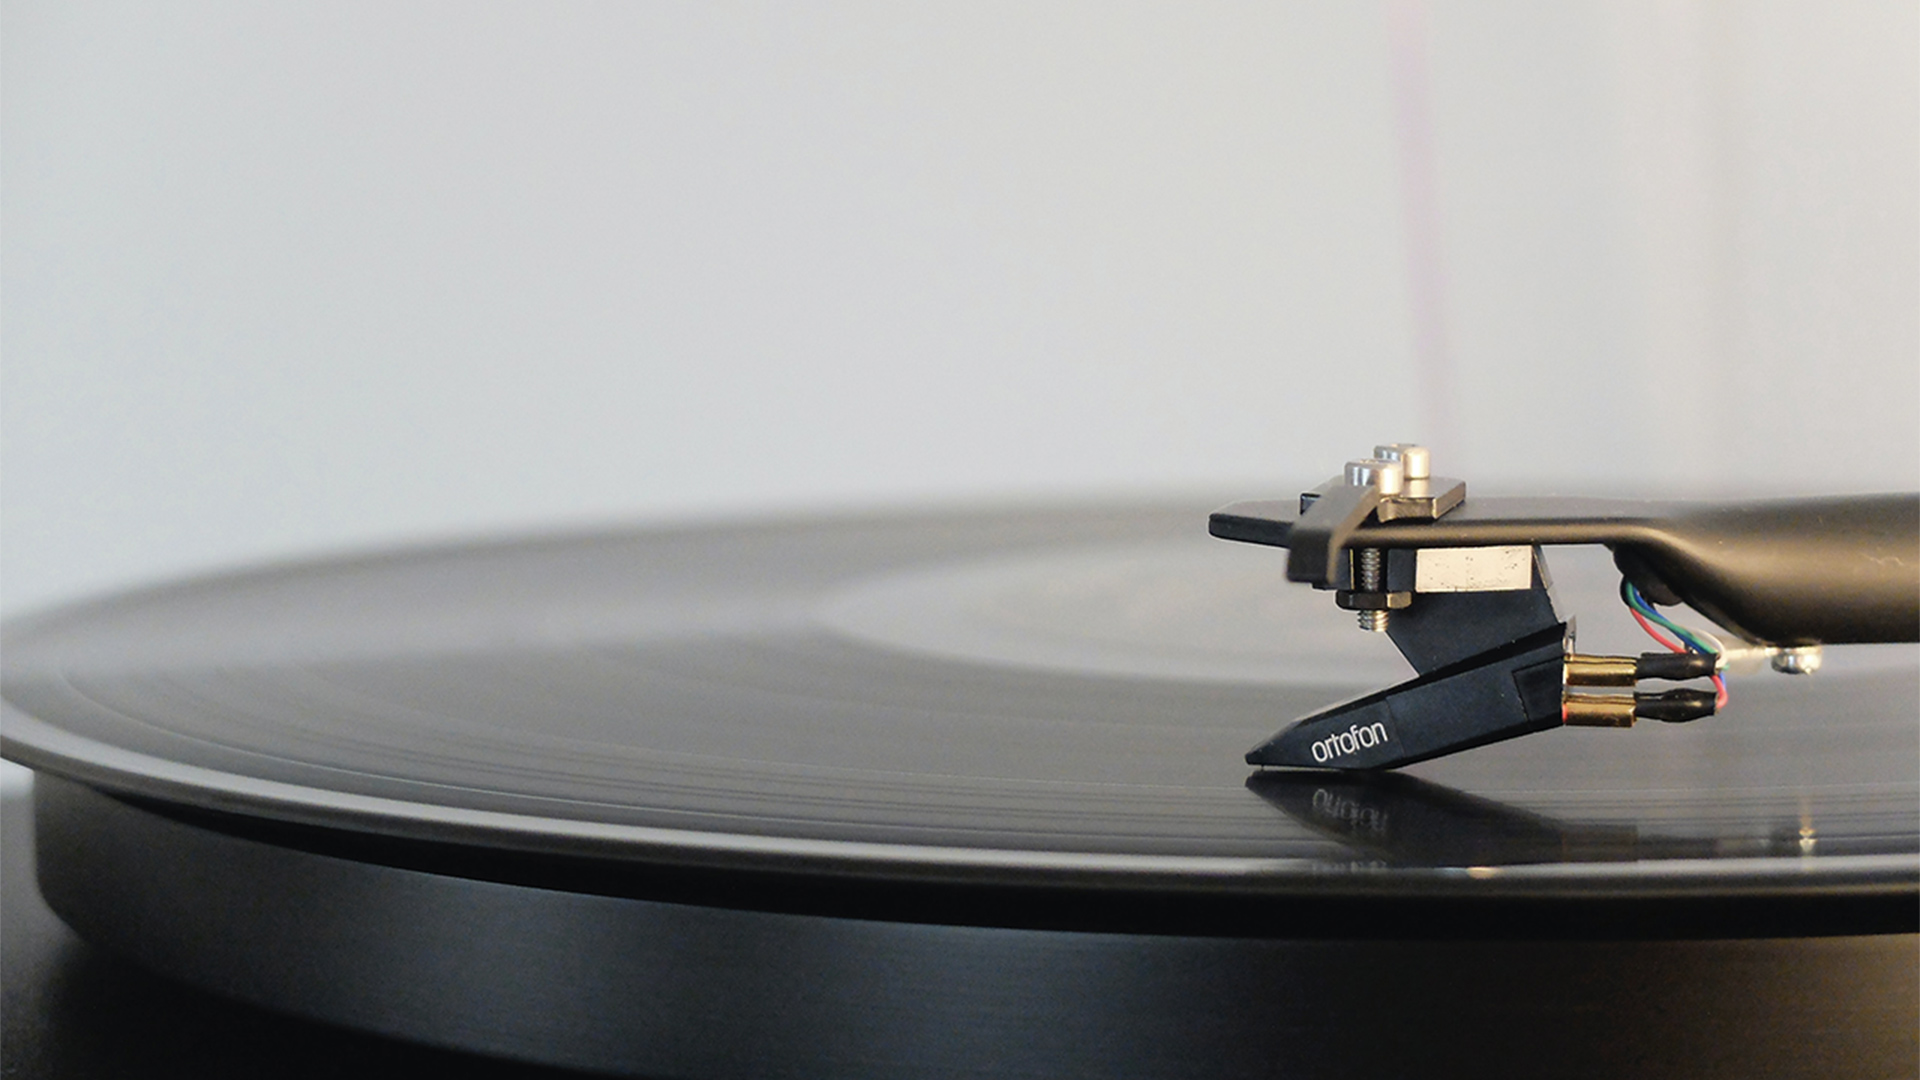 Record player spinning vinyl